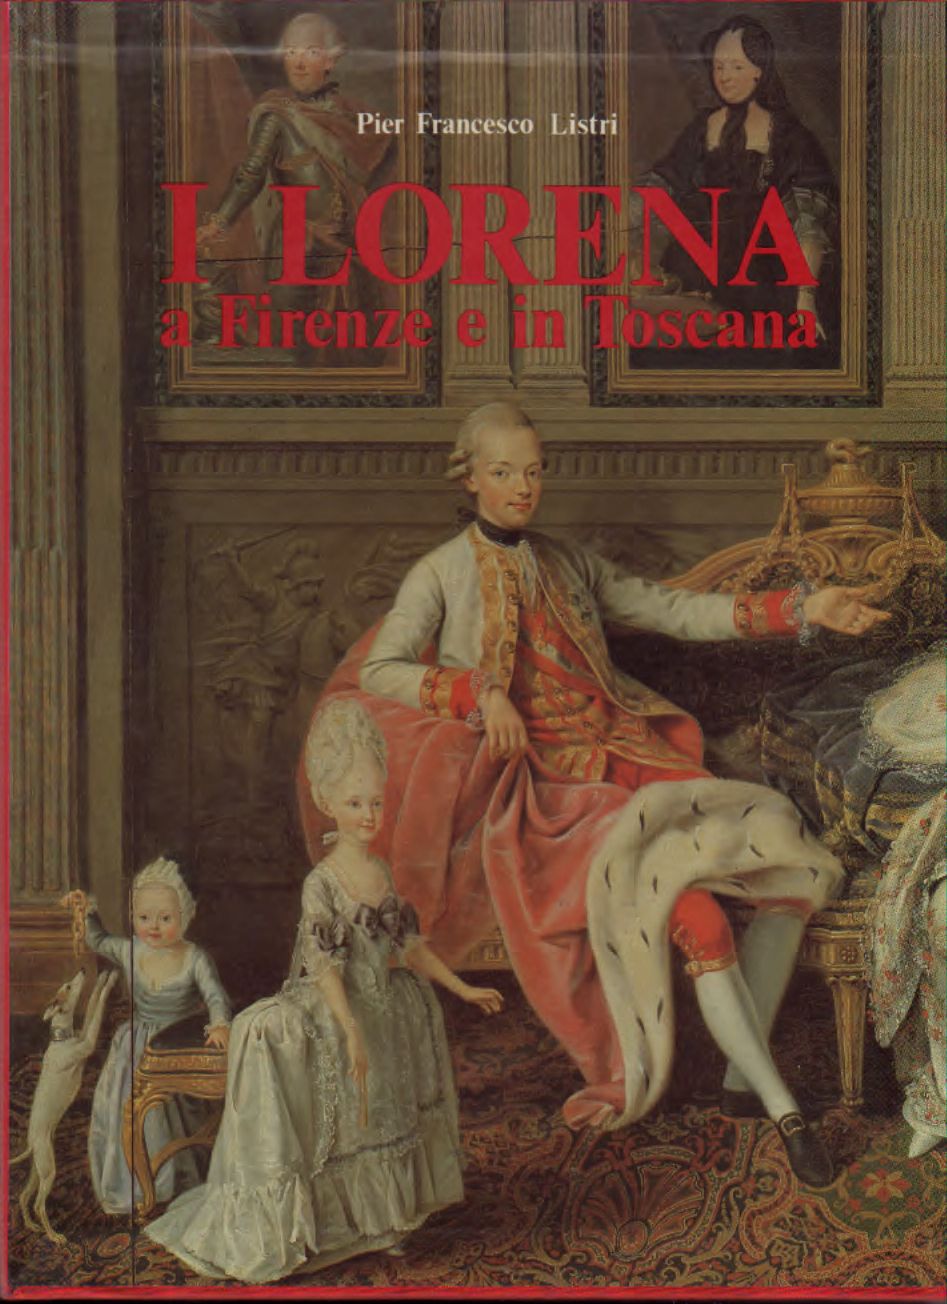 I Lorena a Firenze e in Toscana  Pier Francesco Listri